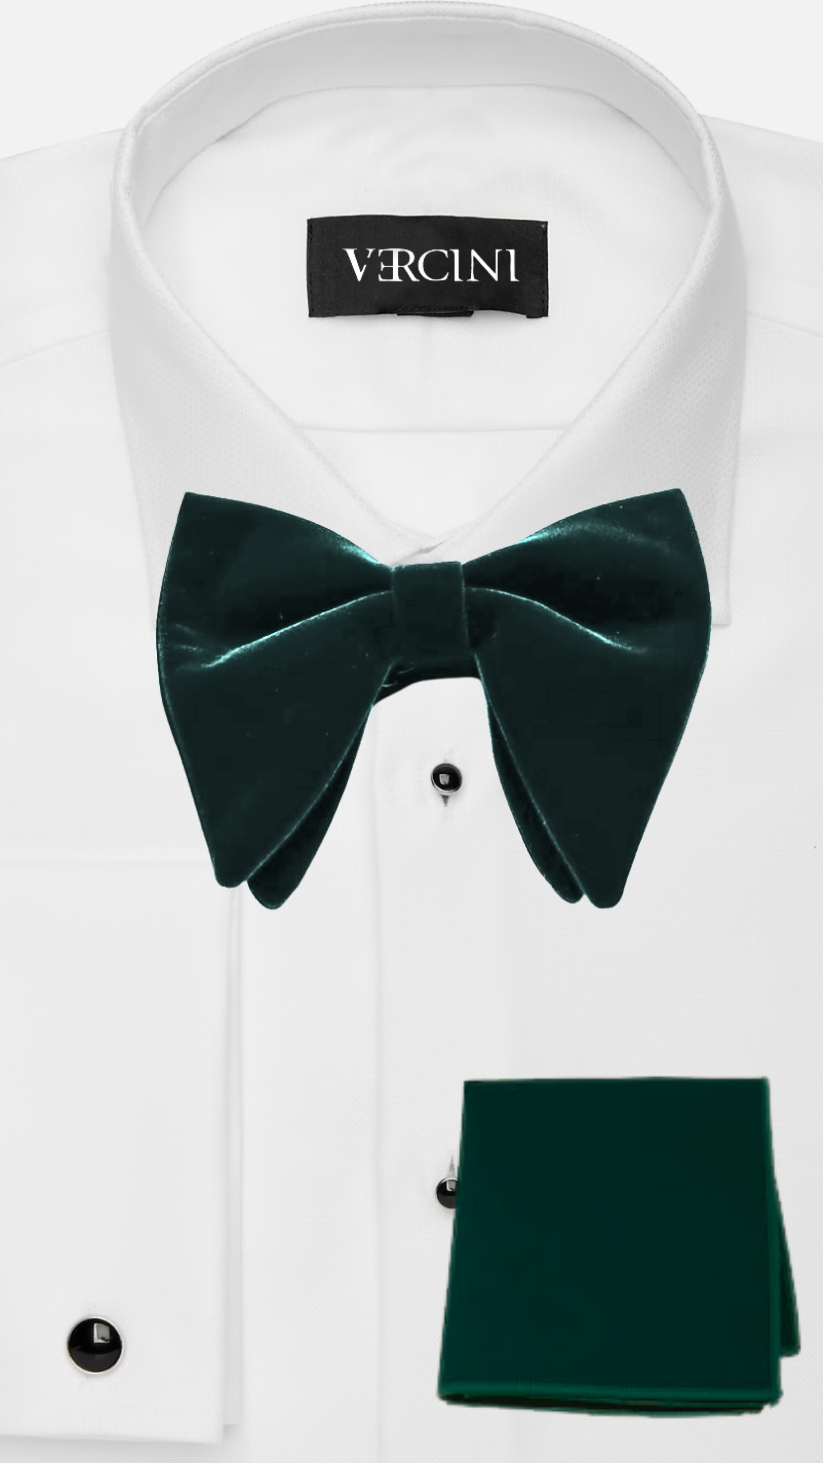 Velvet big bow tie with pocket square